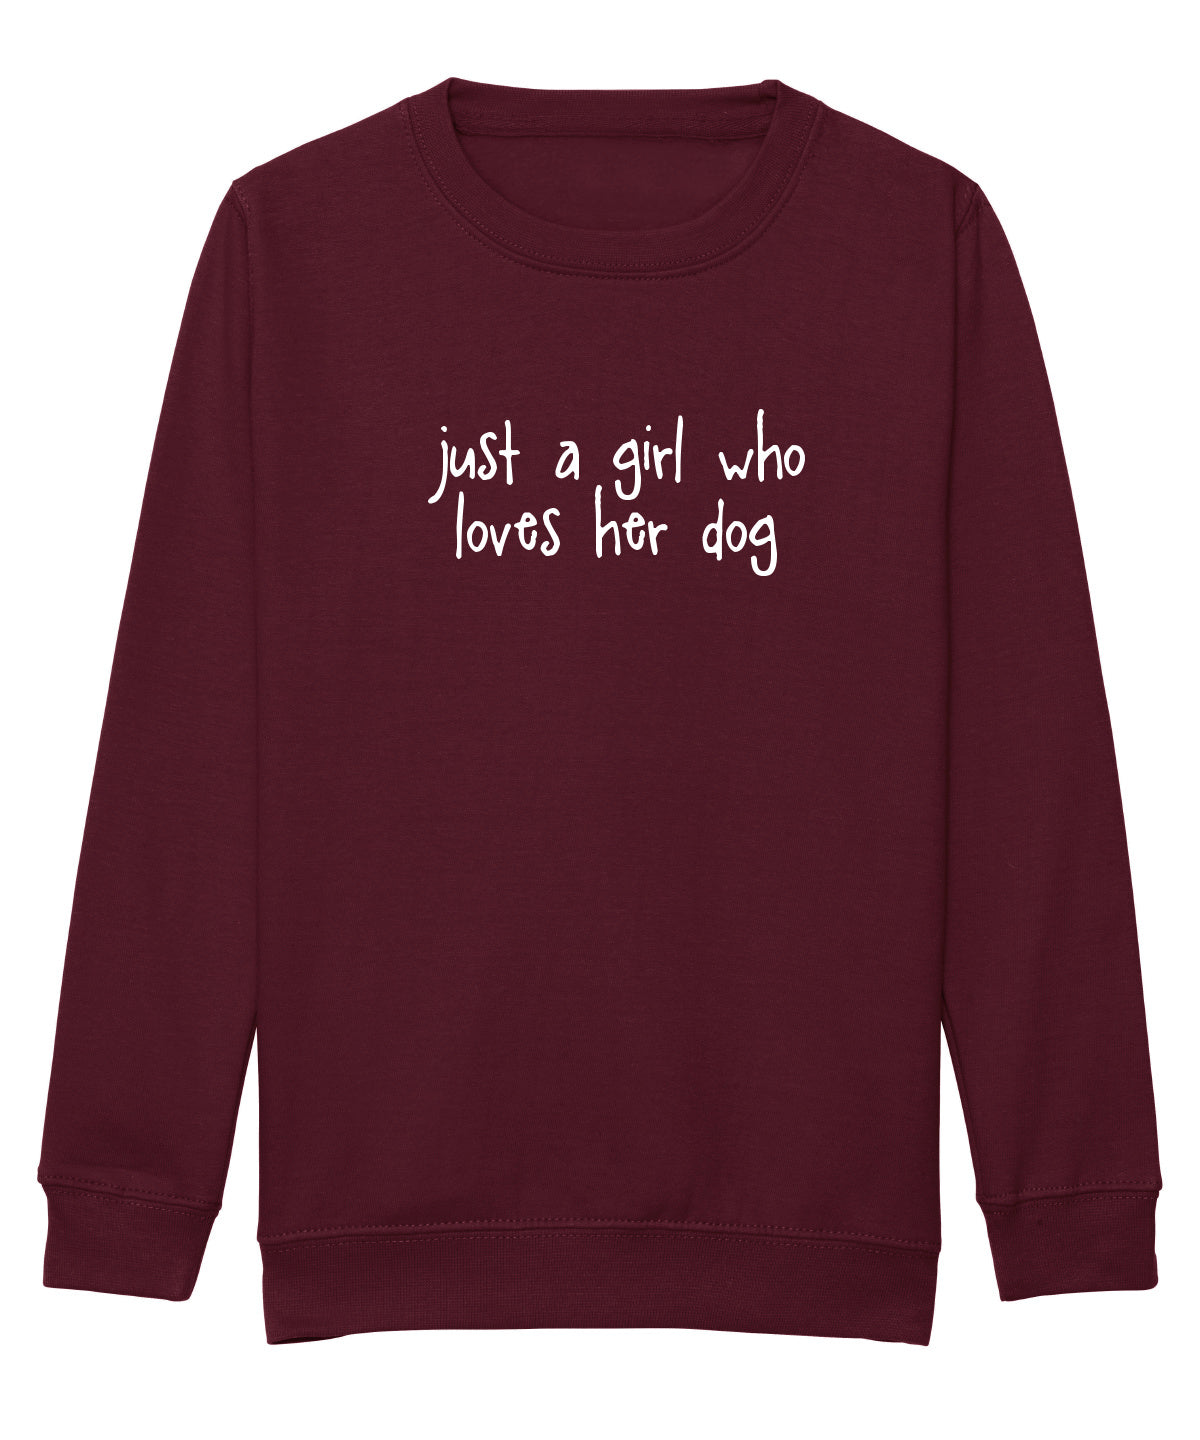 Just a Girl Who Loves Her Dog Sweatshirt, Children's Sweatshirt